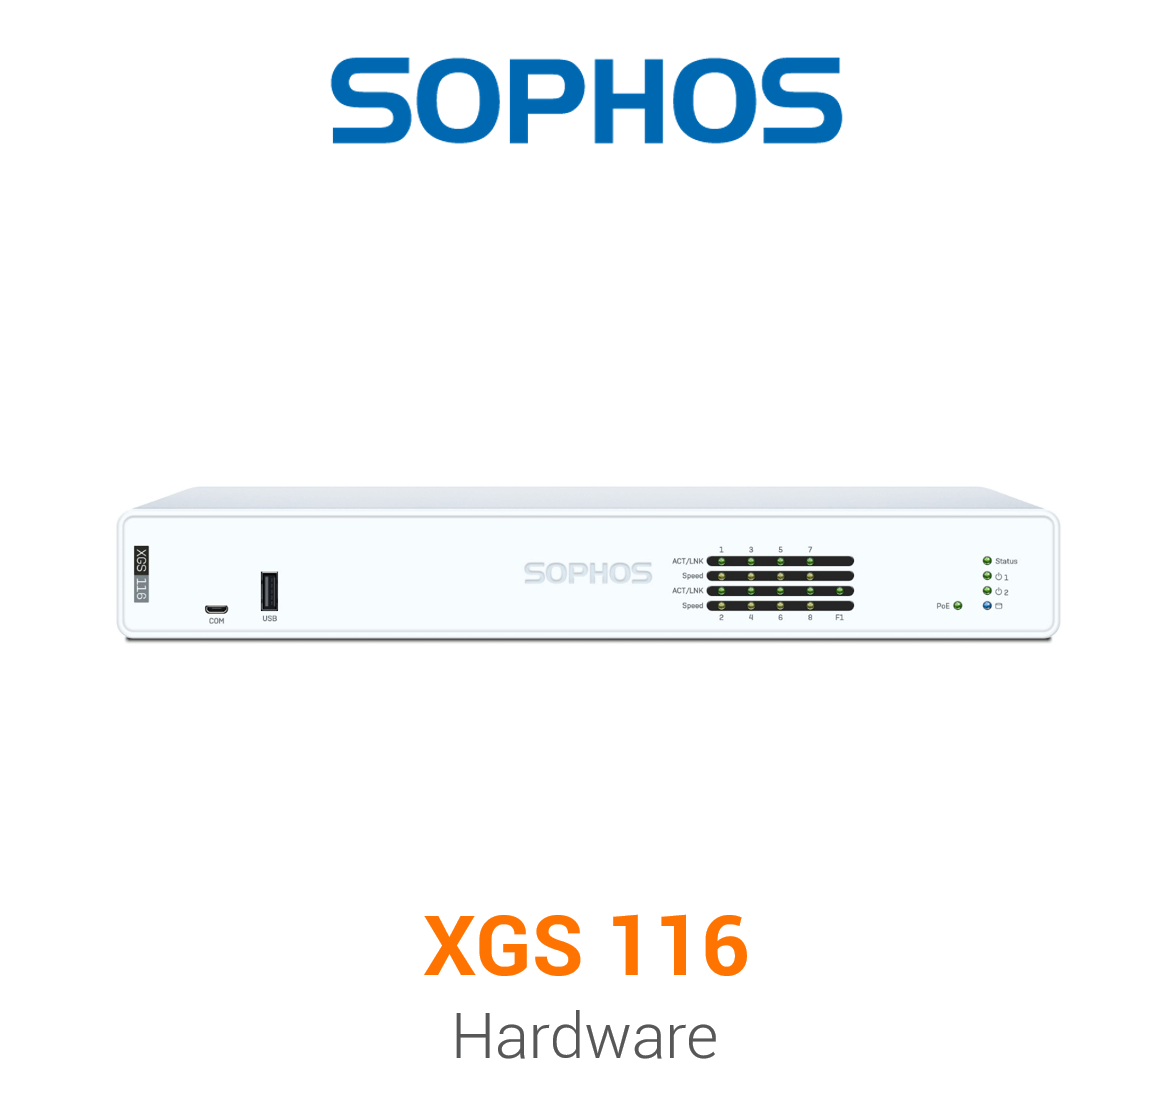 Sophos XGS 116 Security Appliance